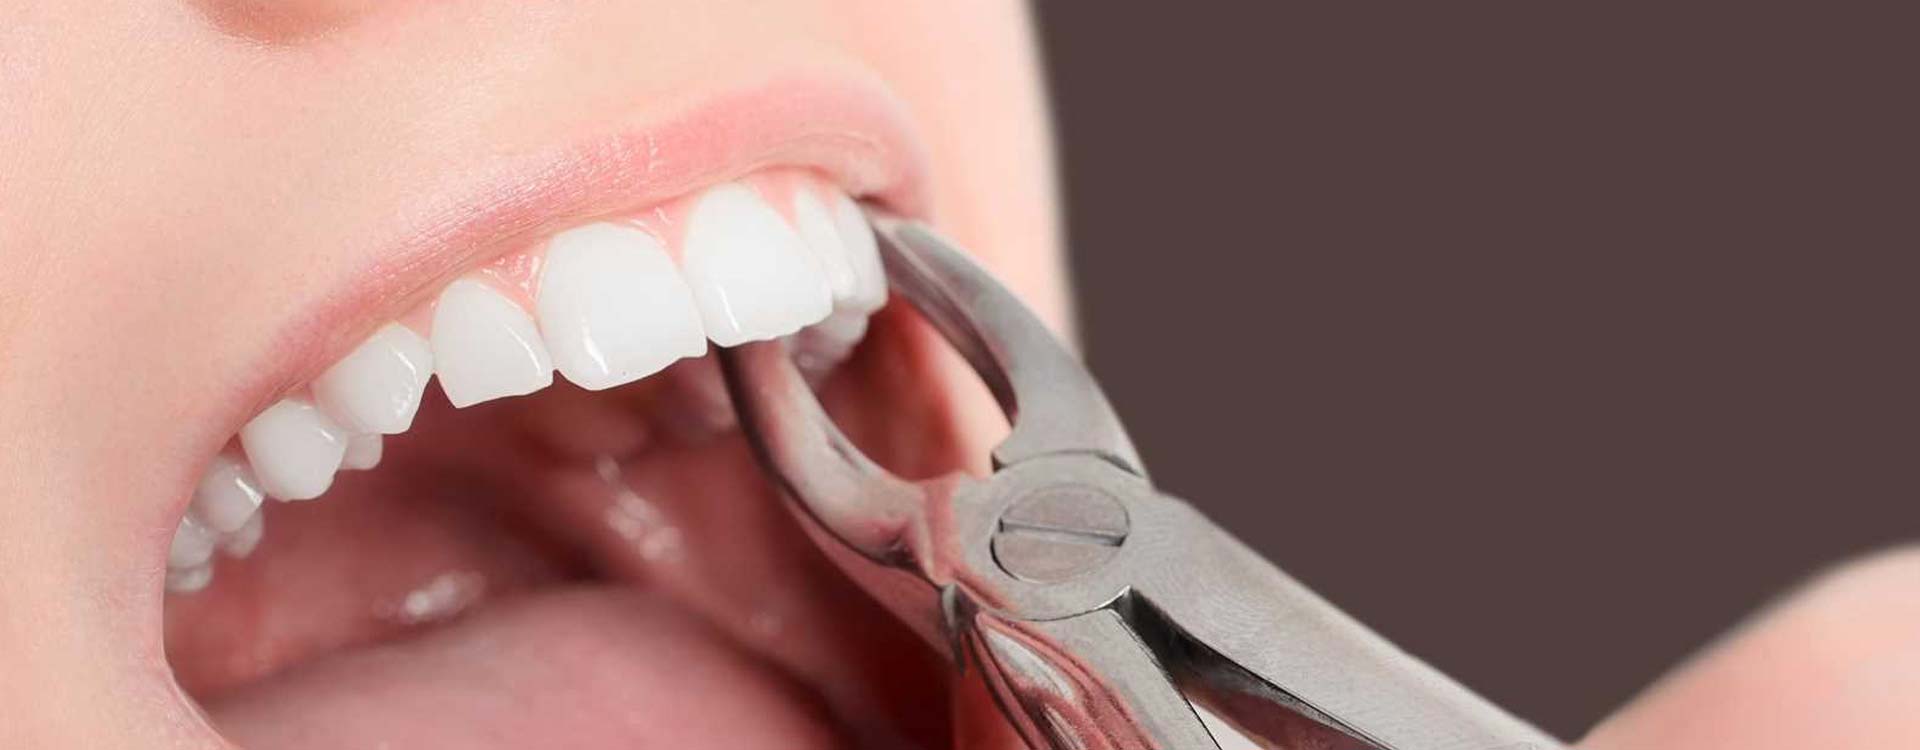 Cum gestionam acasa problemele dentare in contextul covid?